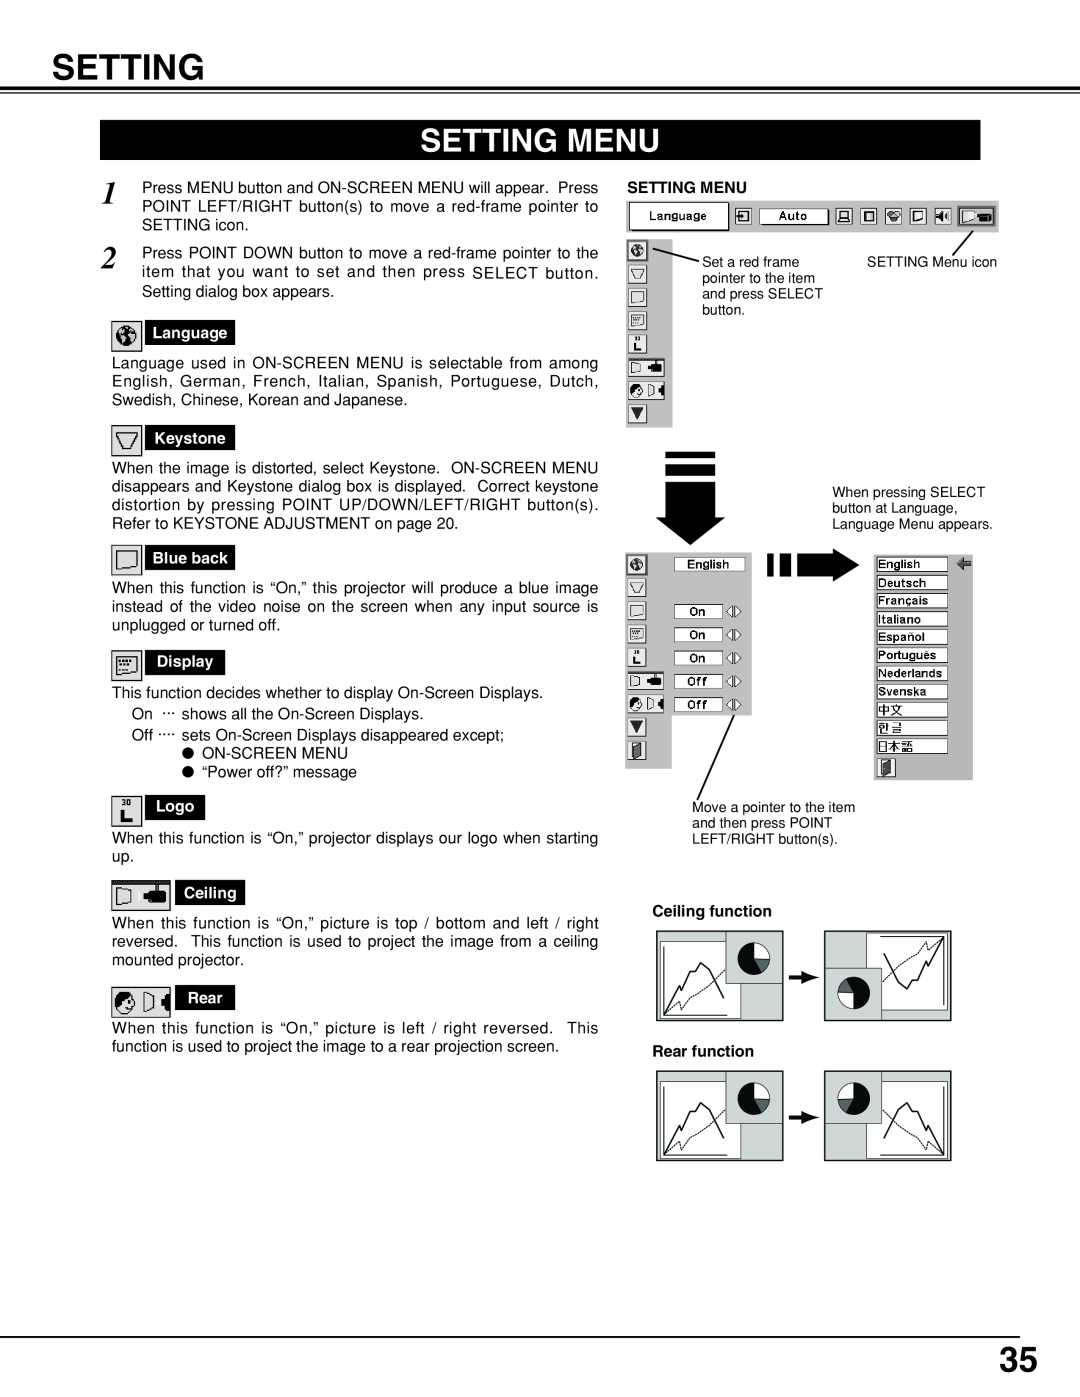 BOXLIGHT CP-19t manual Setting Menu, Language, Keystone, Blue back, Display, Logo, Ceiling, Rear 